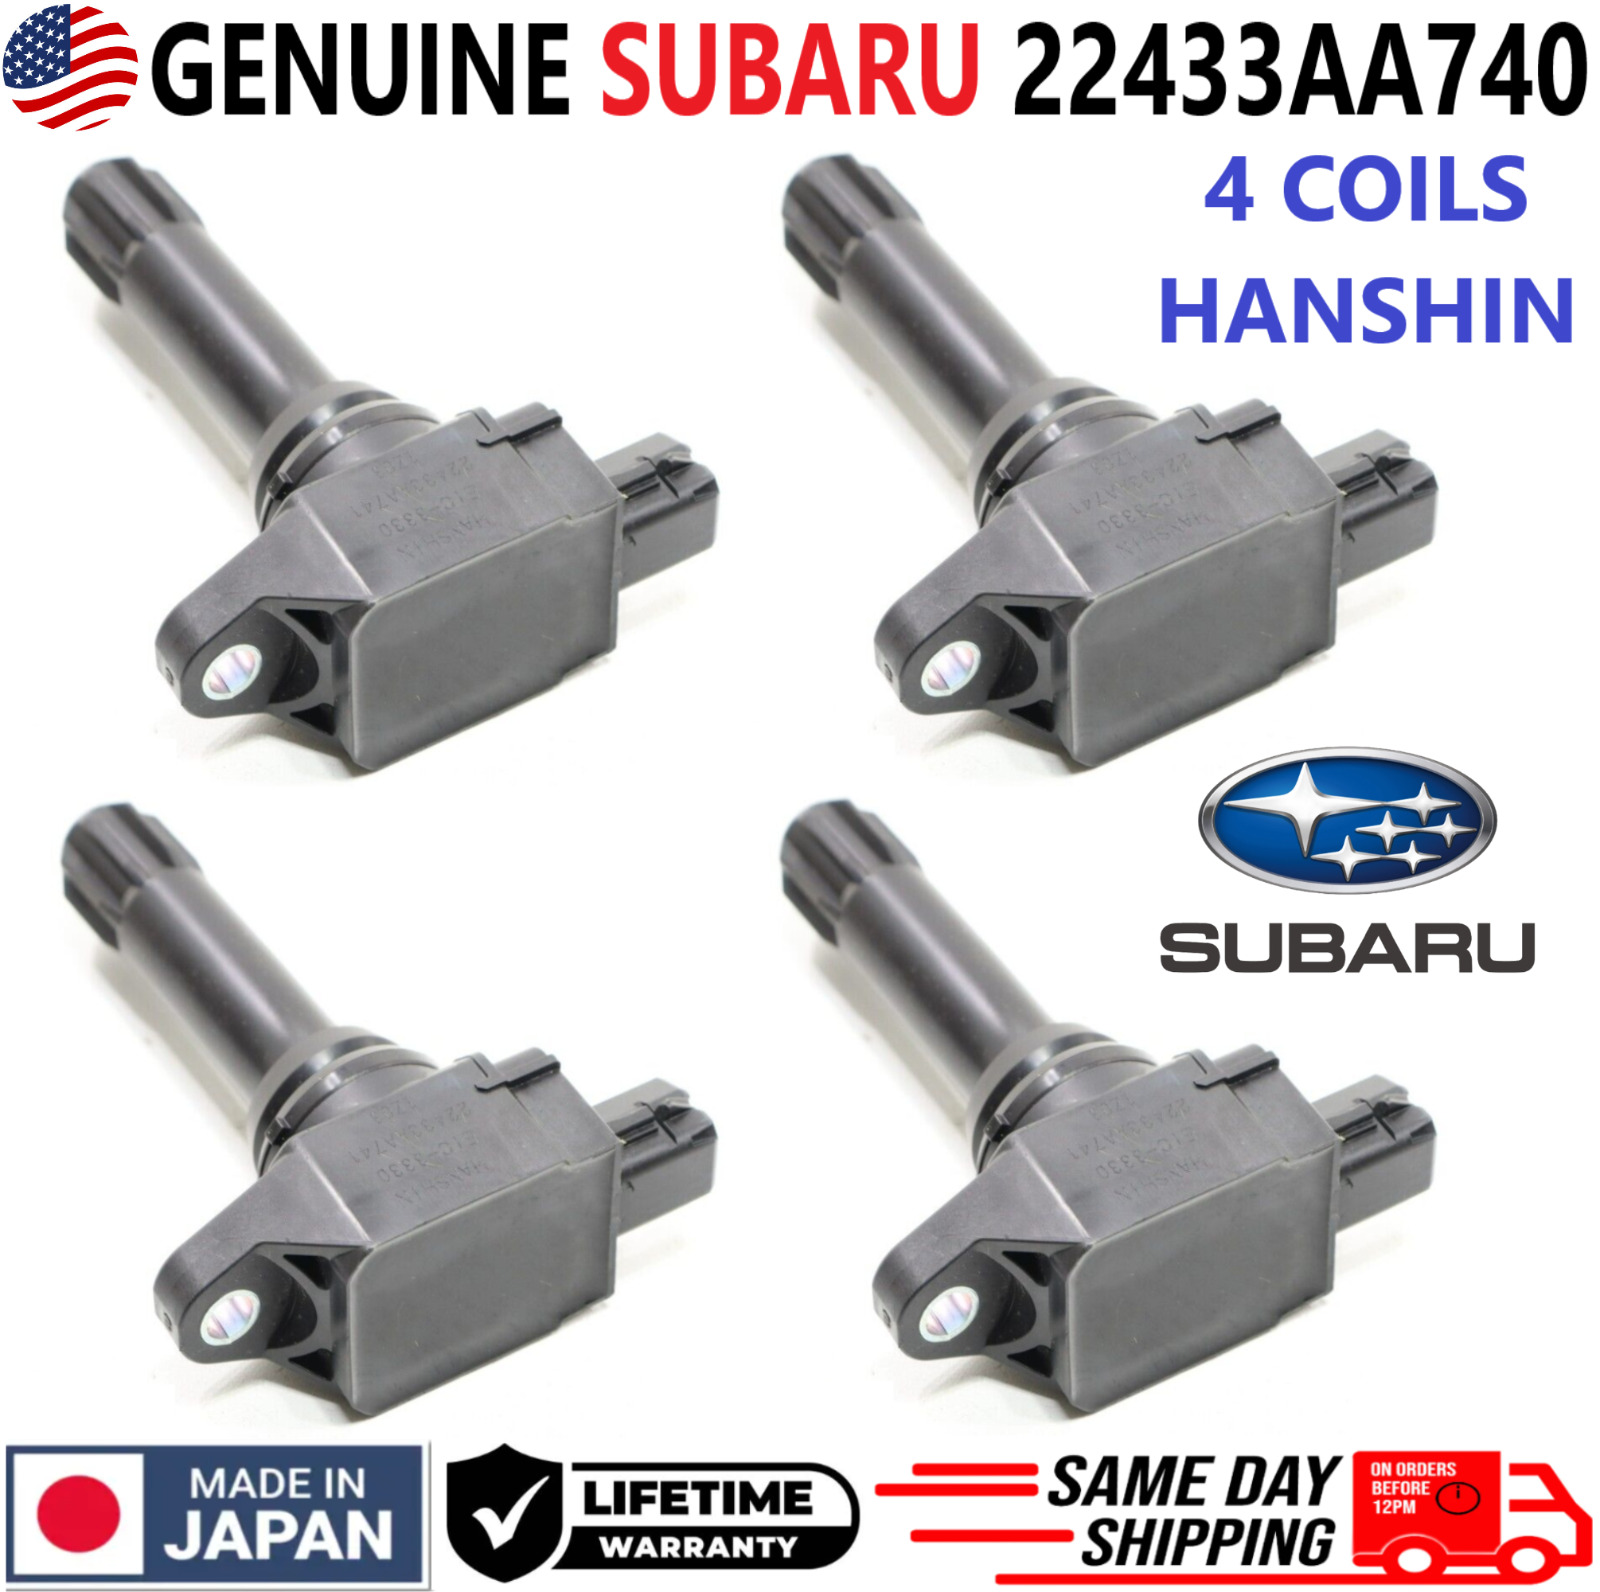 OEM GENUINE SUBARU Ignition Coils For 2015-2020 Subaru 2.0L 2.5L H4, 22433-AA740